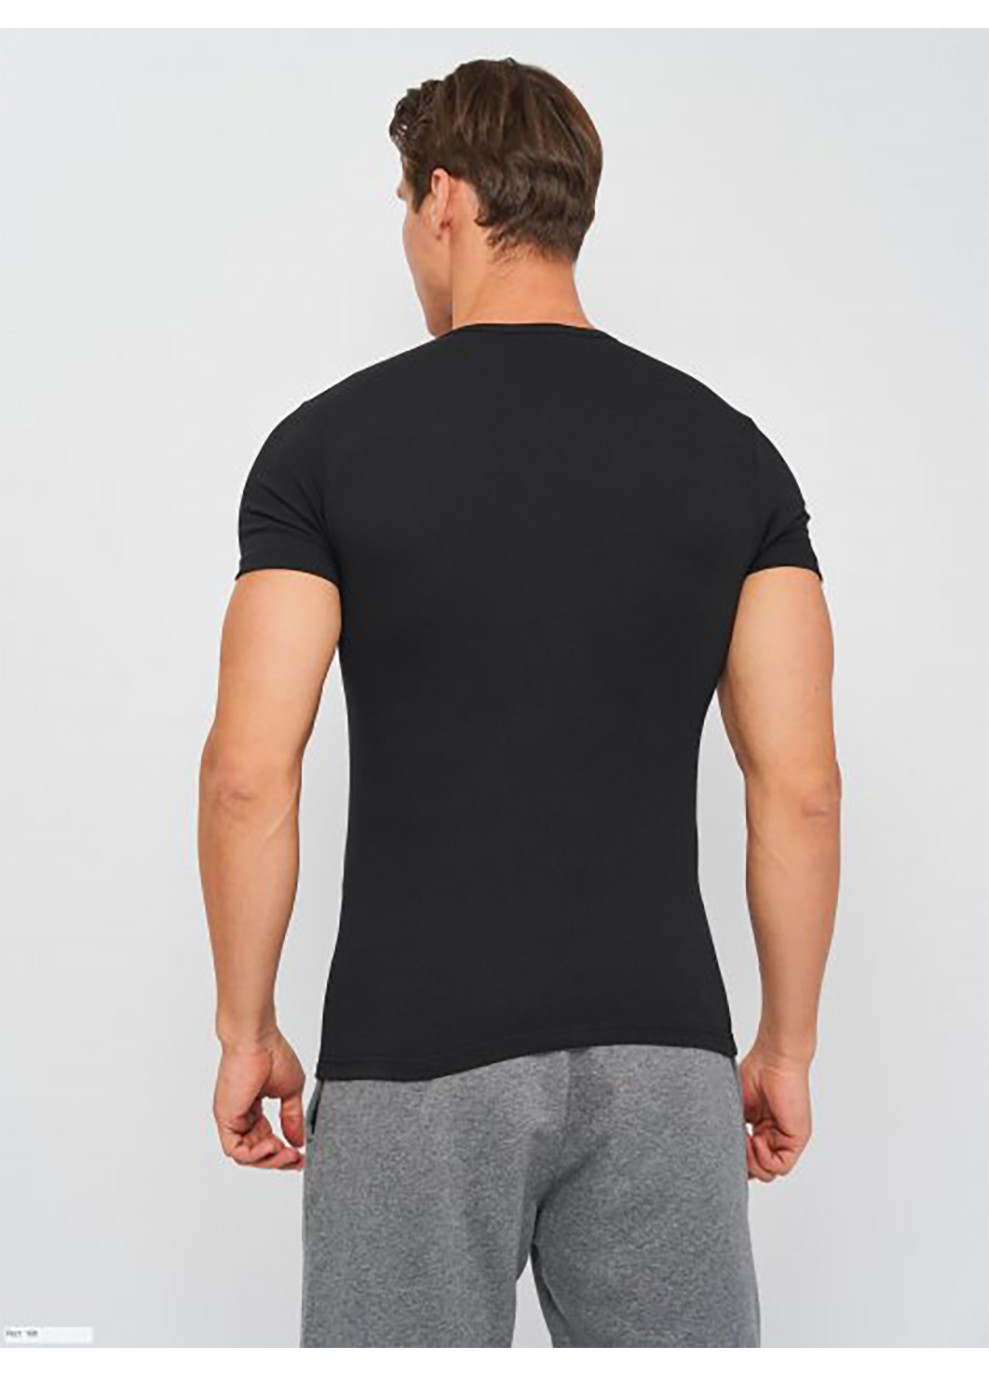 Черная футболка t-shirt mezza manica girocollo черный xl муж k1304 nero-xl Kappa